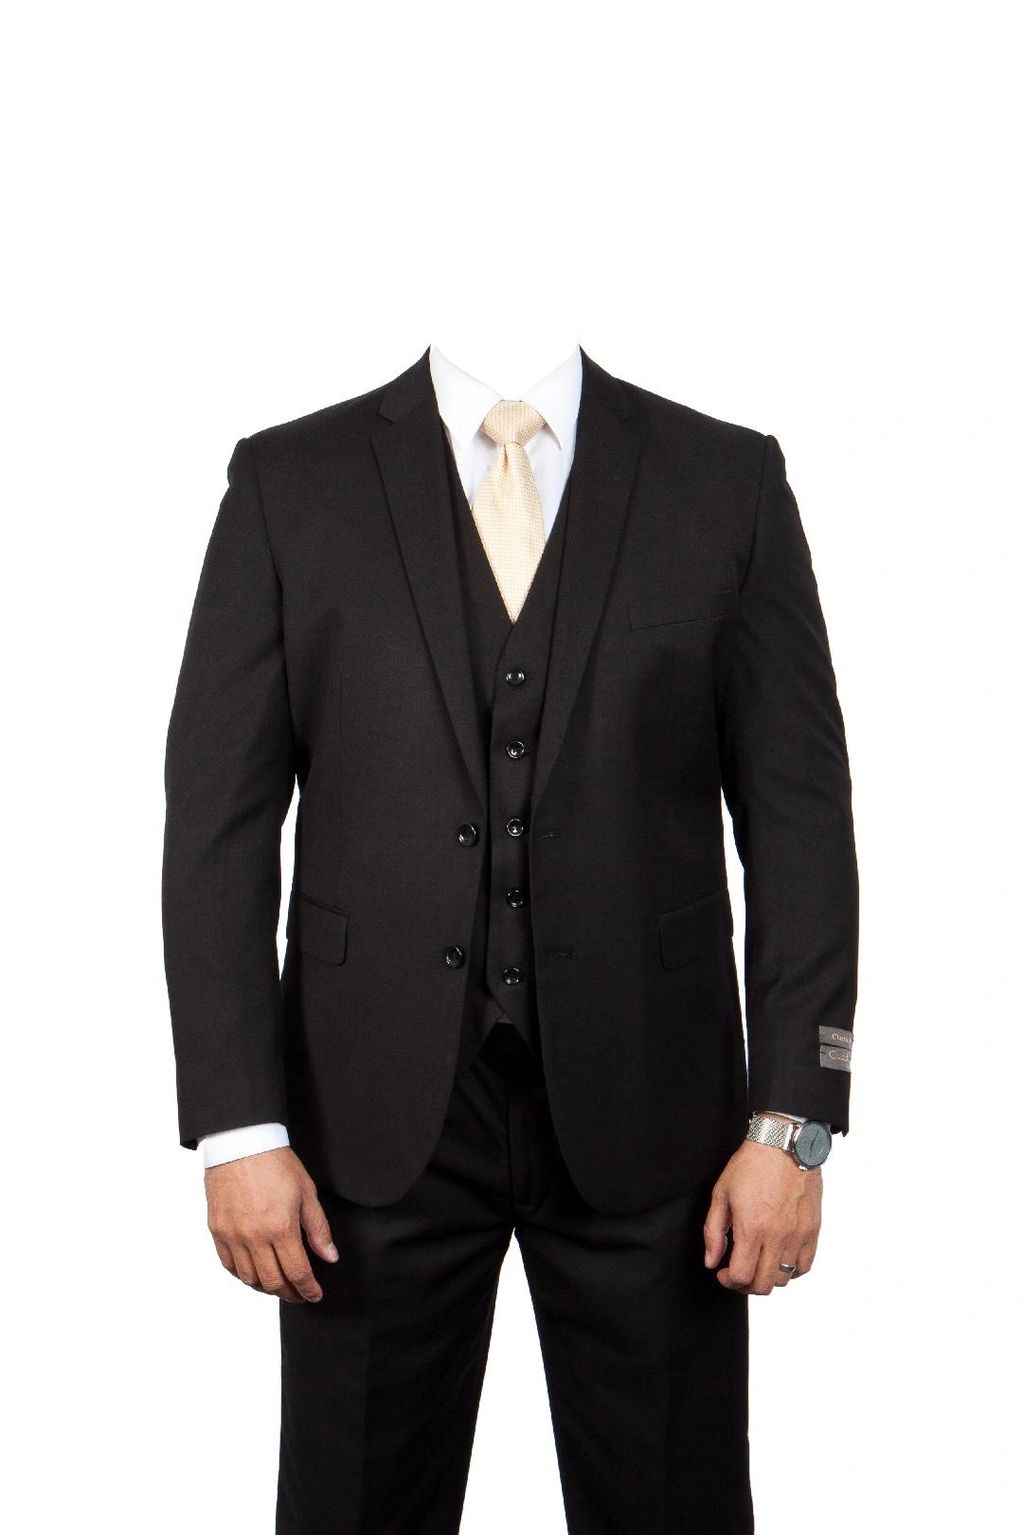 Black suit 6pc Rental $199.99
Colors:Lt grey, Mid Grey, Charcoal, White,Black,Navy,Indigo blue & Tan